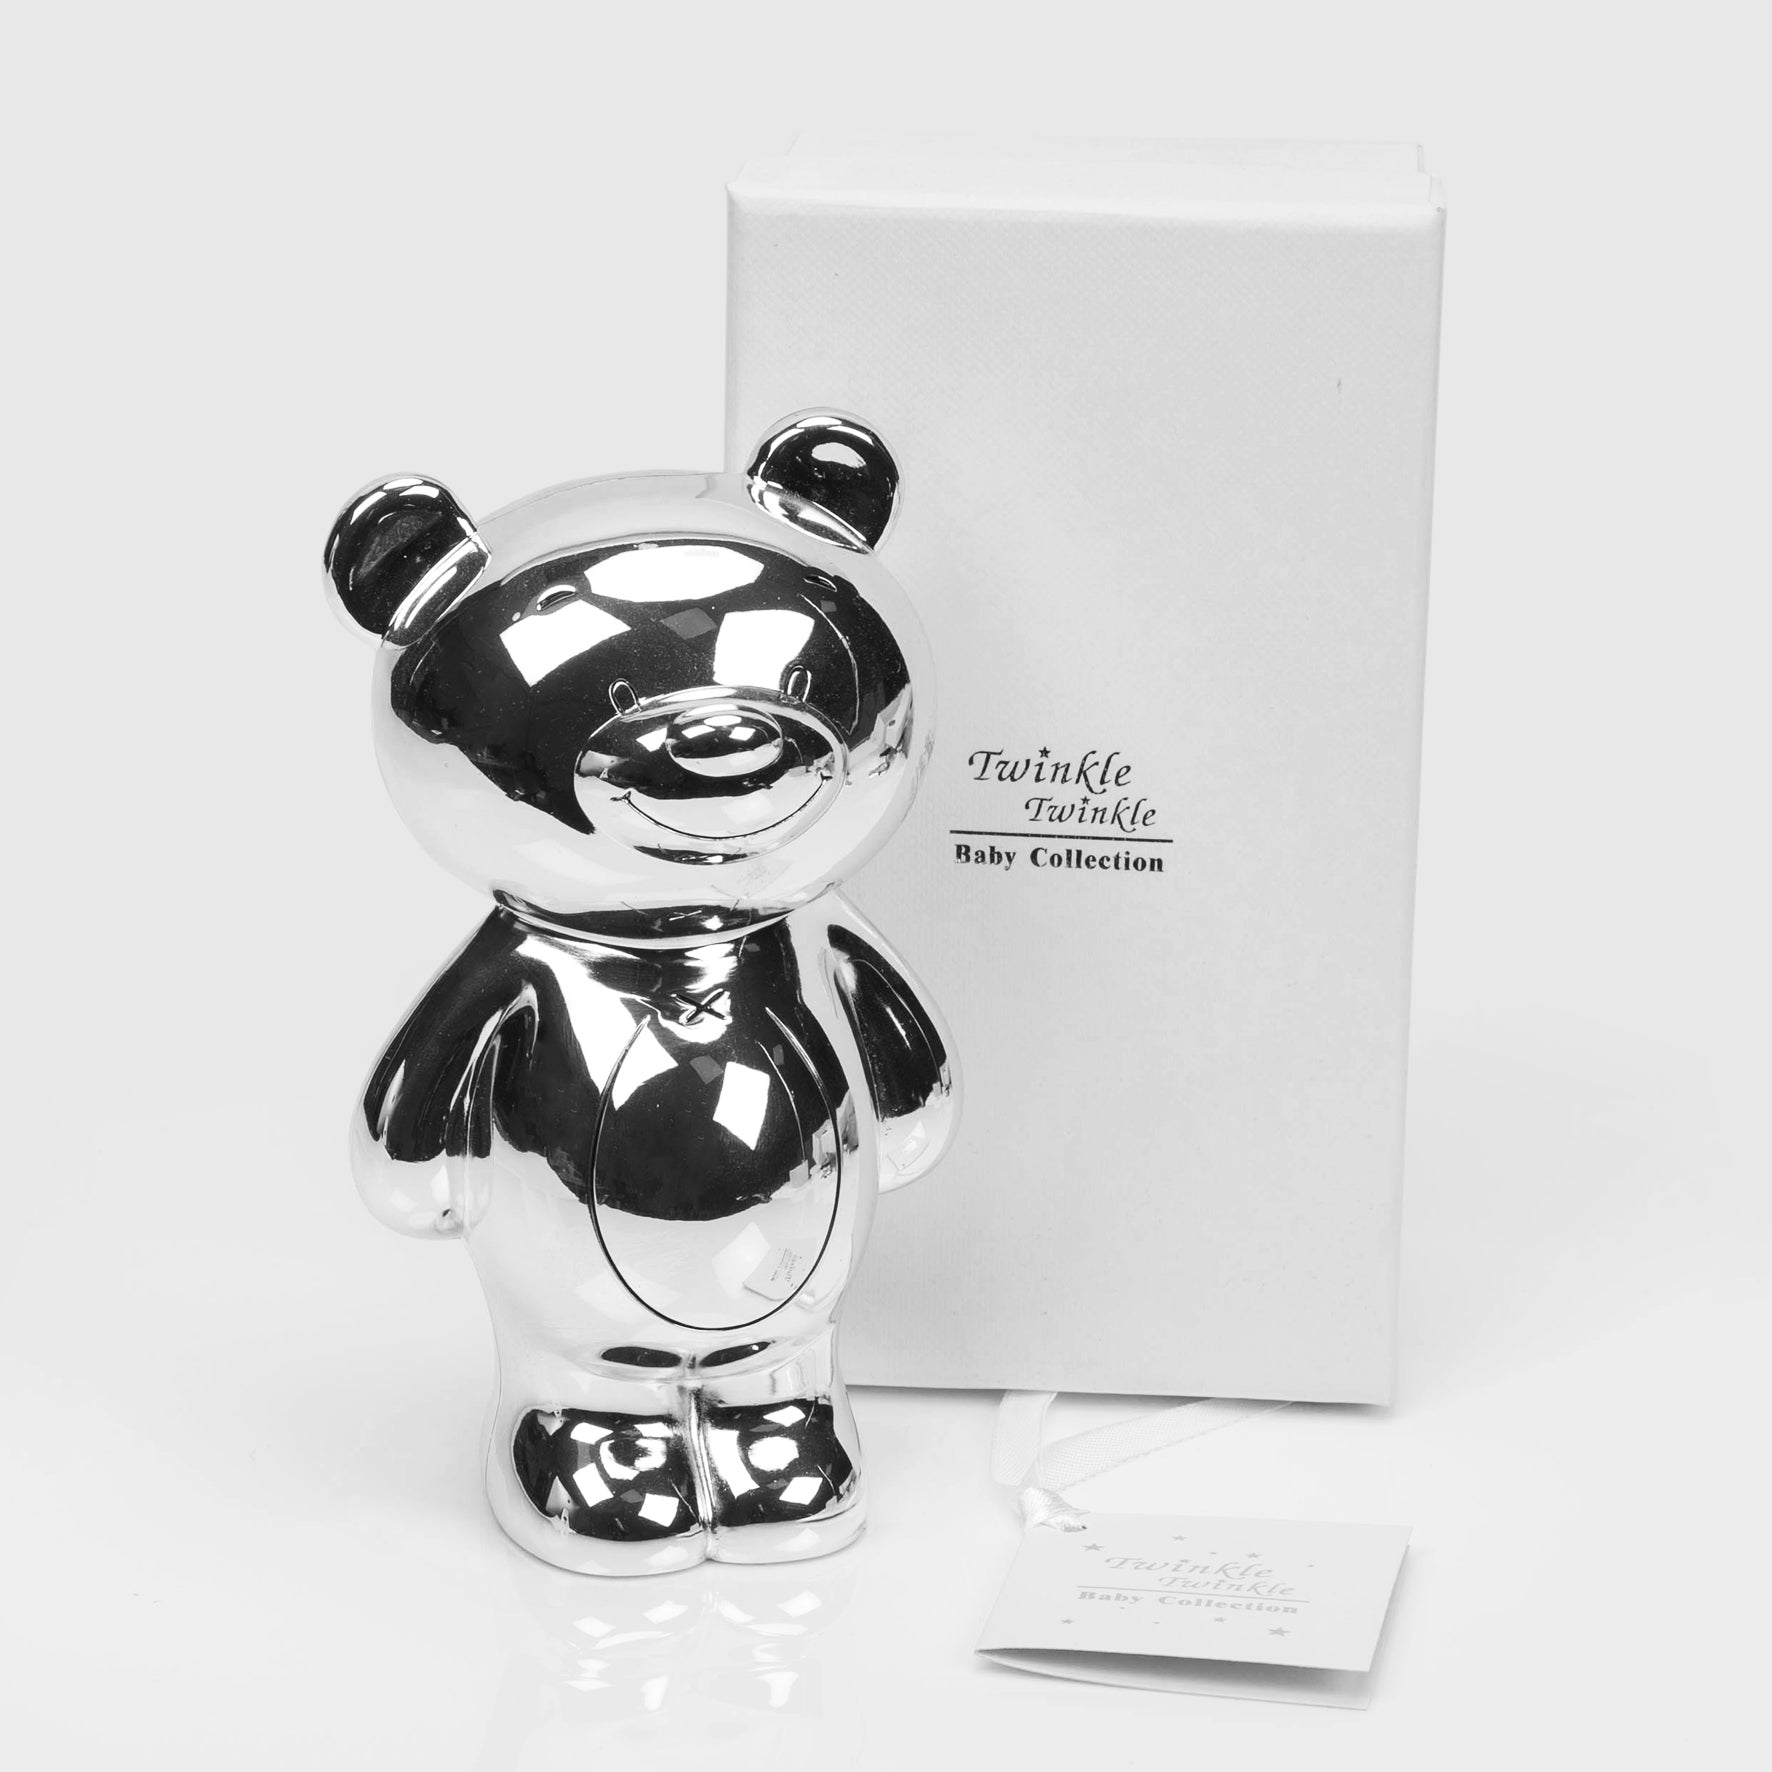 Silver teddy bear money box bank with gift box.